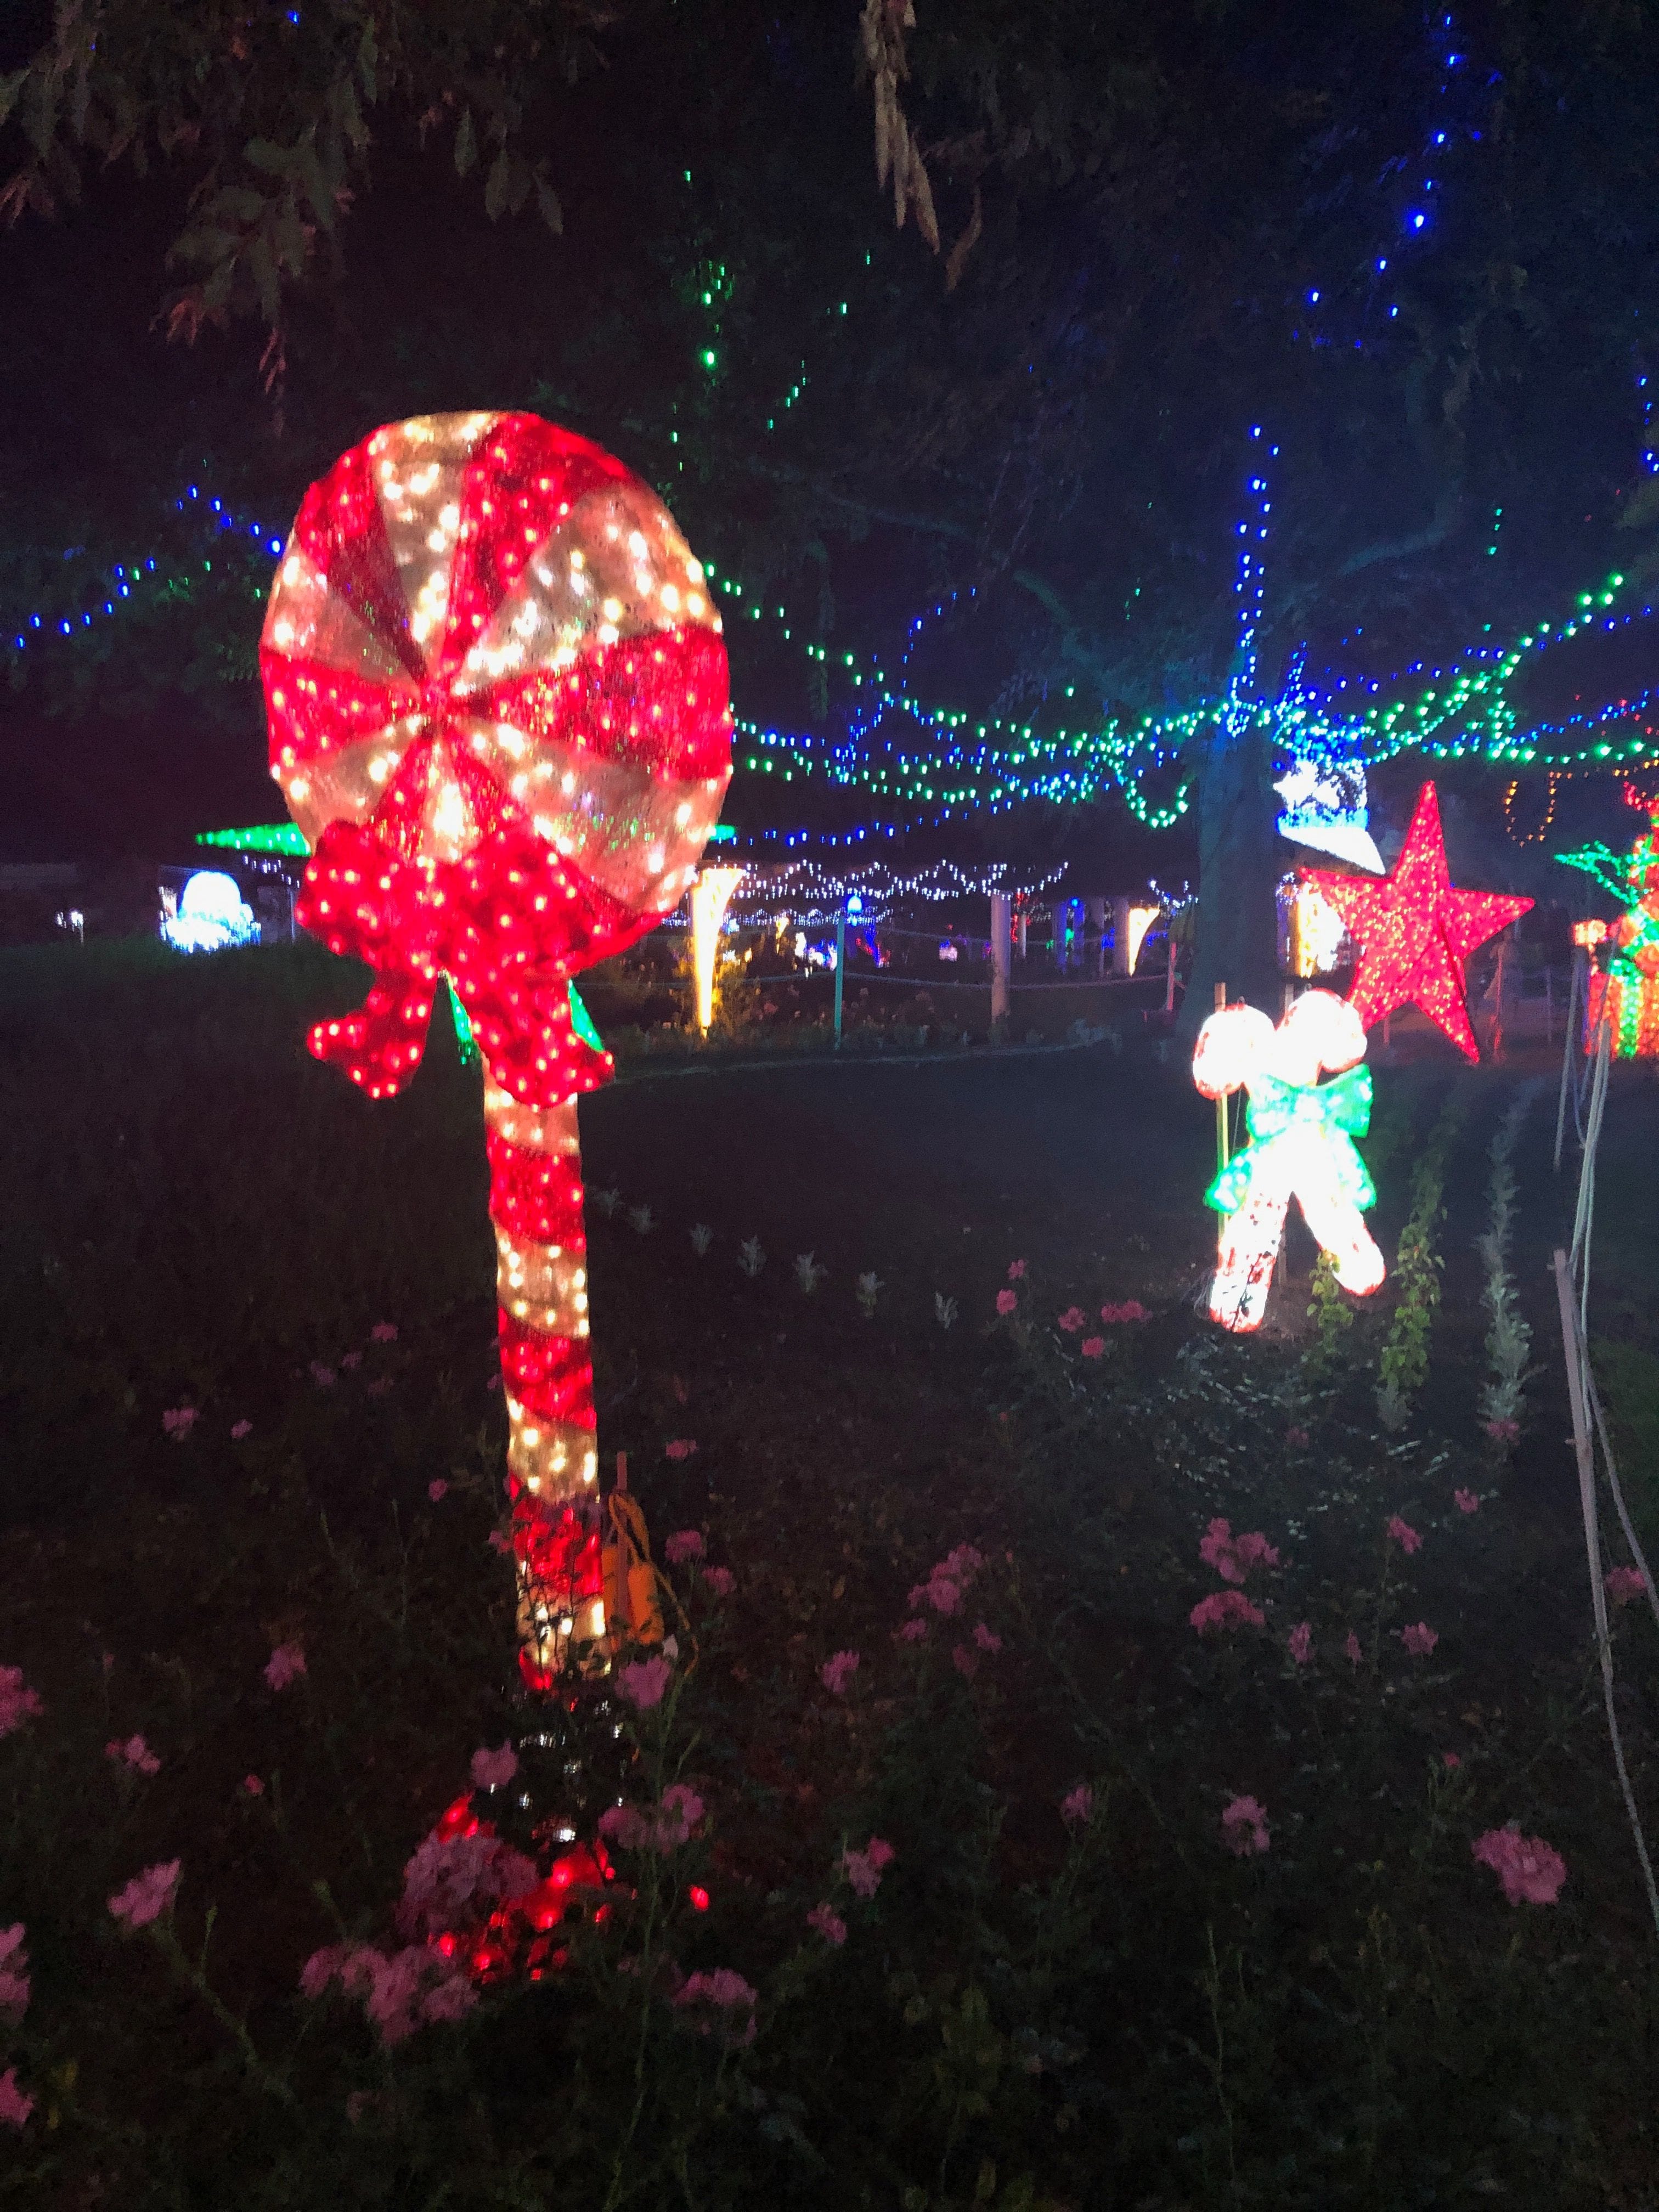 Hunter Valley Christmas Lights Spectacular 2019 Image -5e9b6f9d9fde0